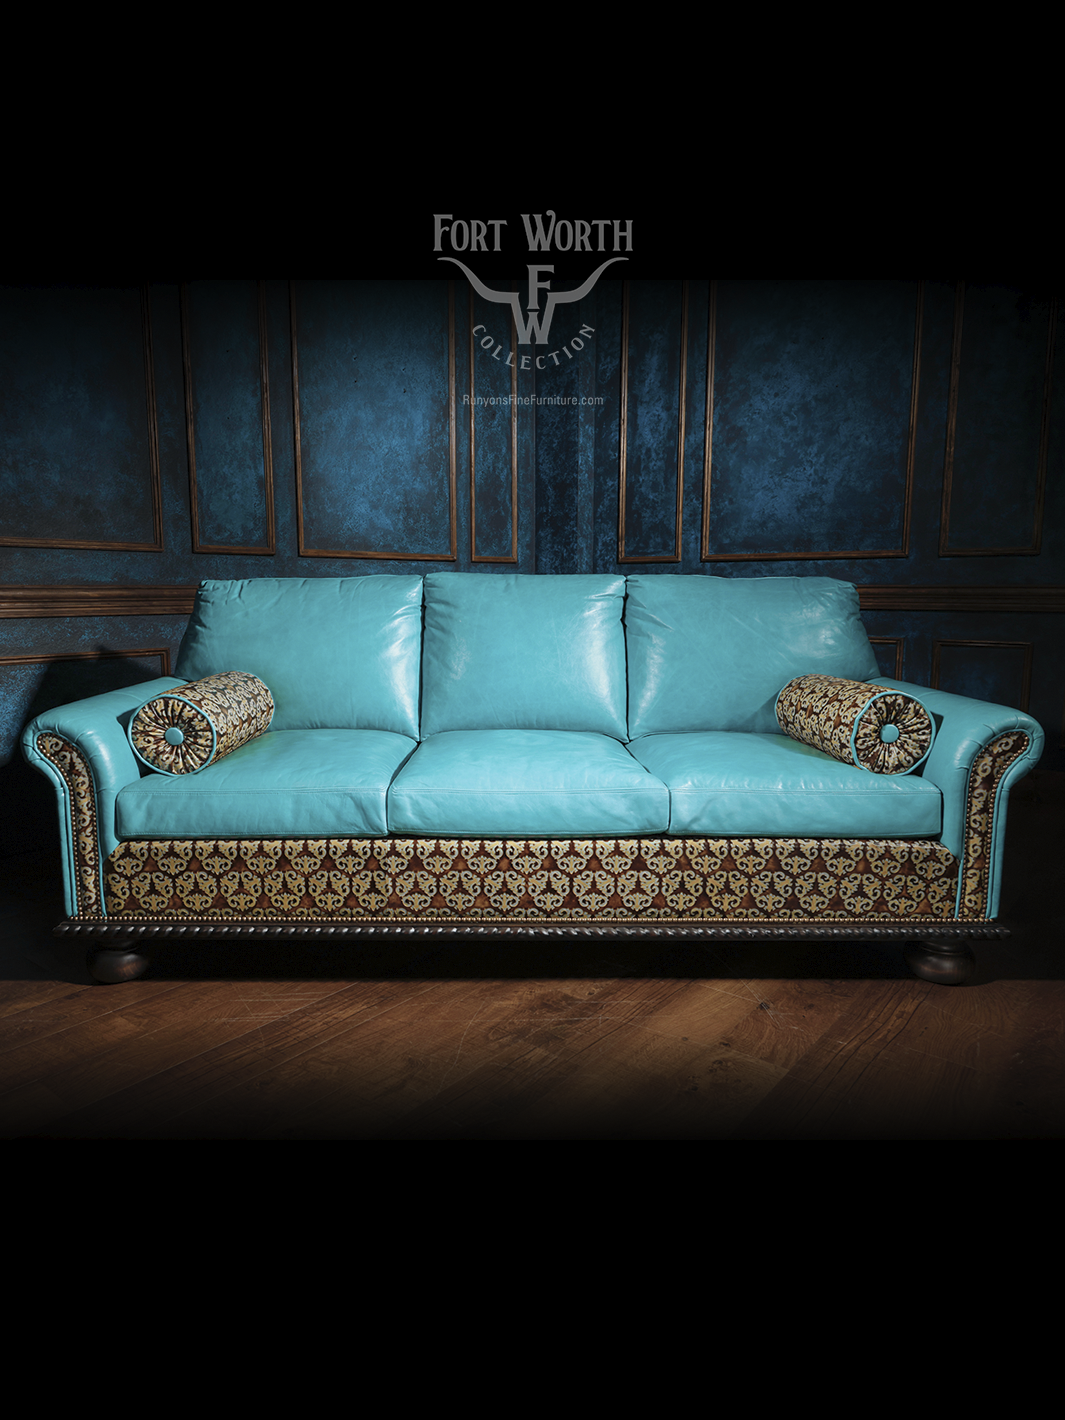 Cowboy Caribbean Blue Leather Sofa Runyon S Fine Furniture